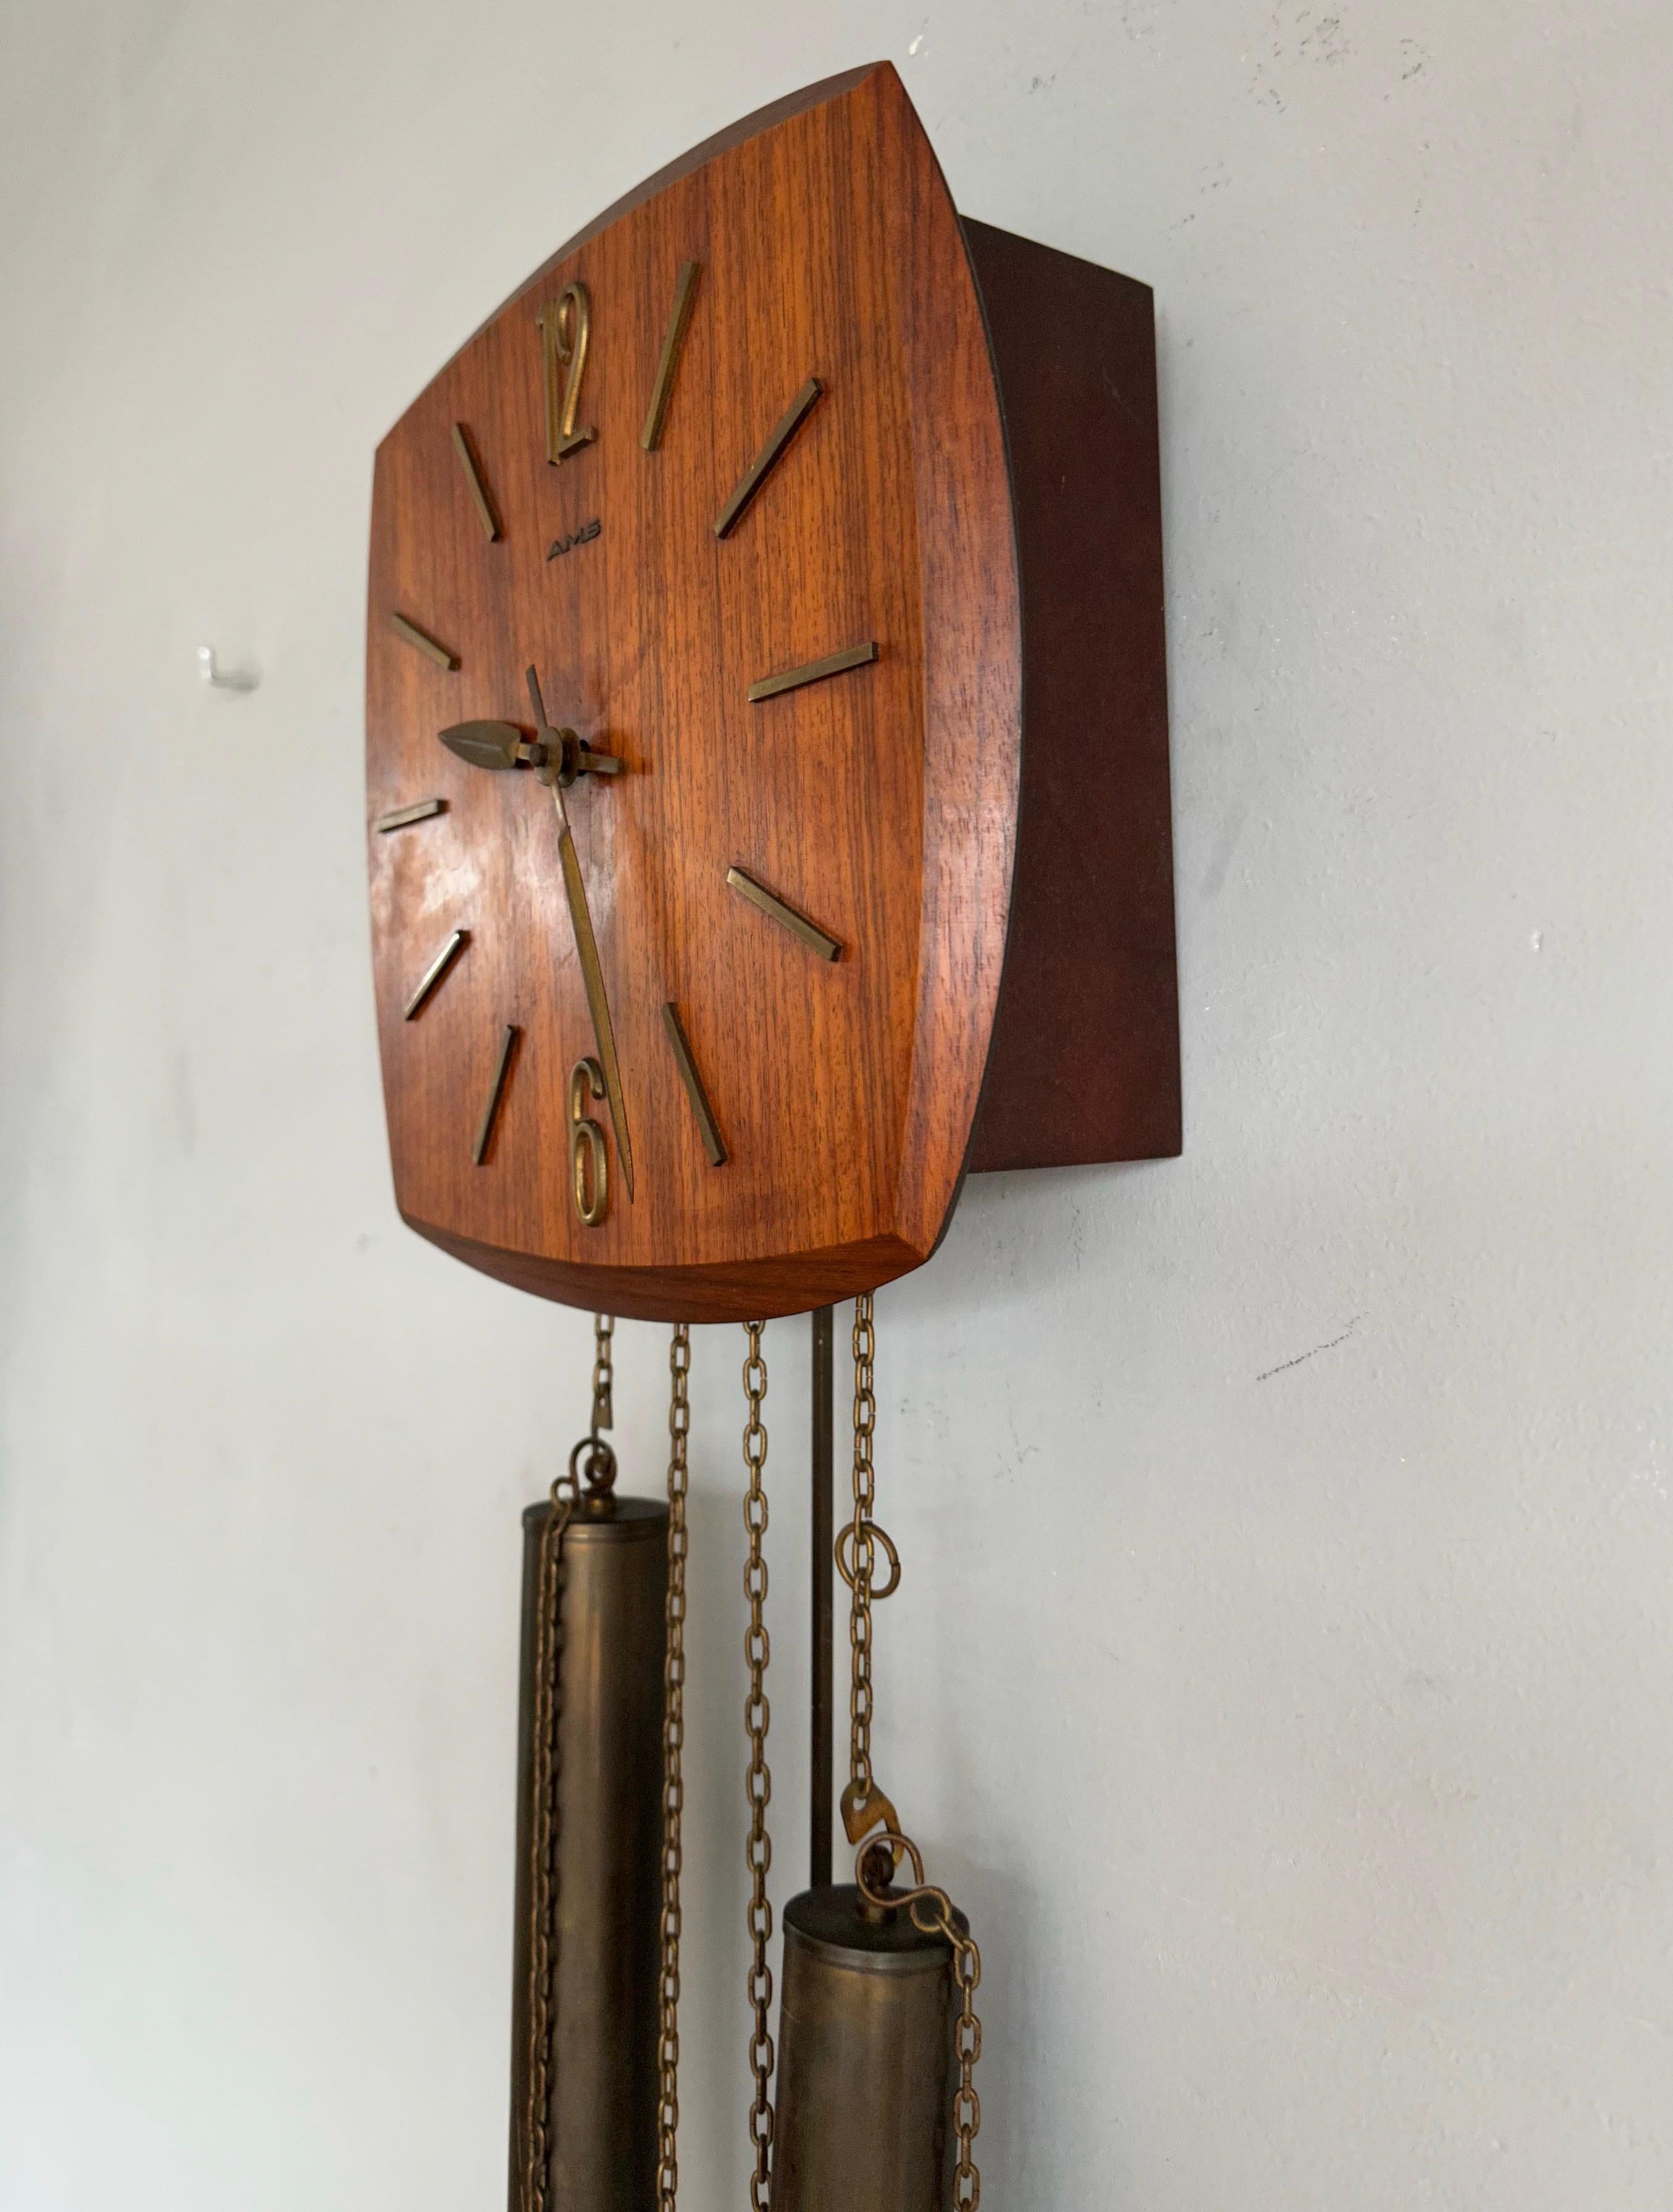 Beautiful Midcentury Danish Teak Wood Pendulum Wall Clock, Great Condition 1960s For Sale 1